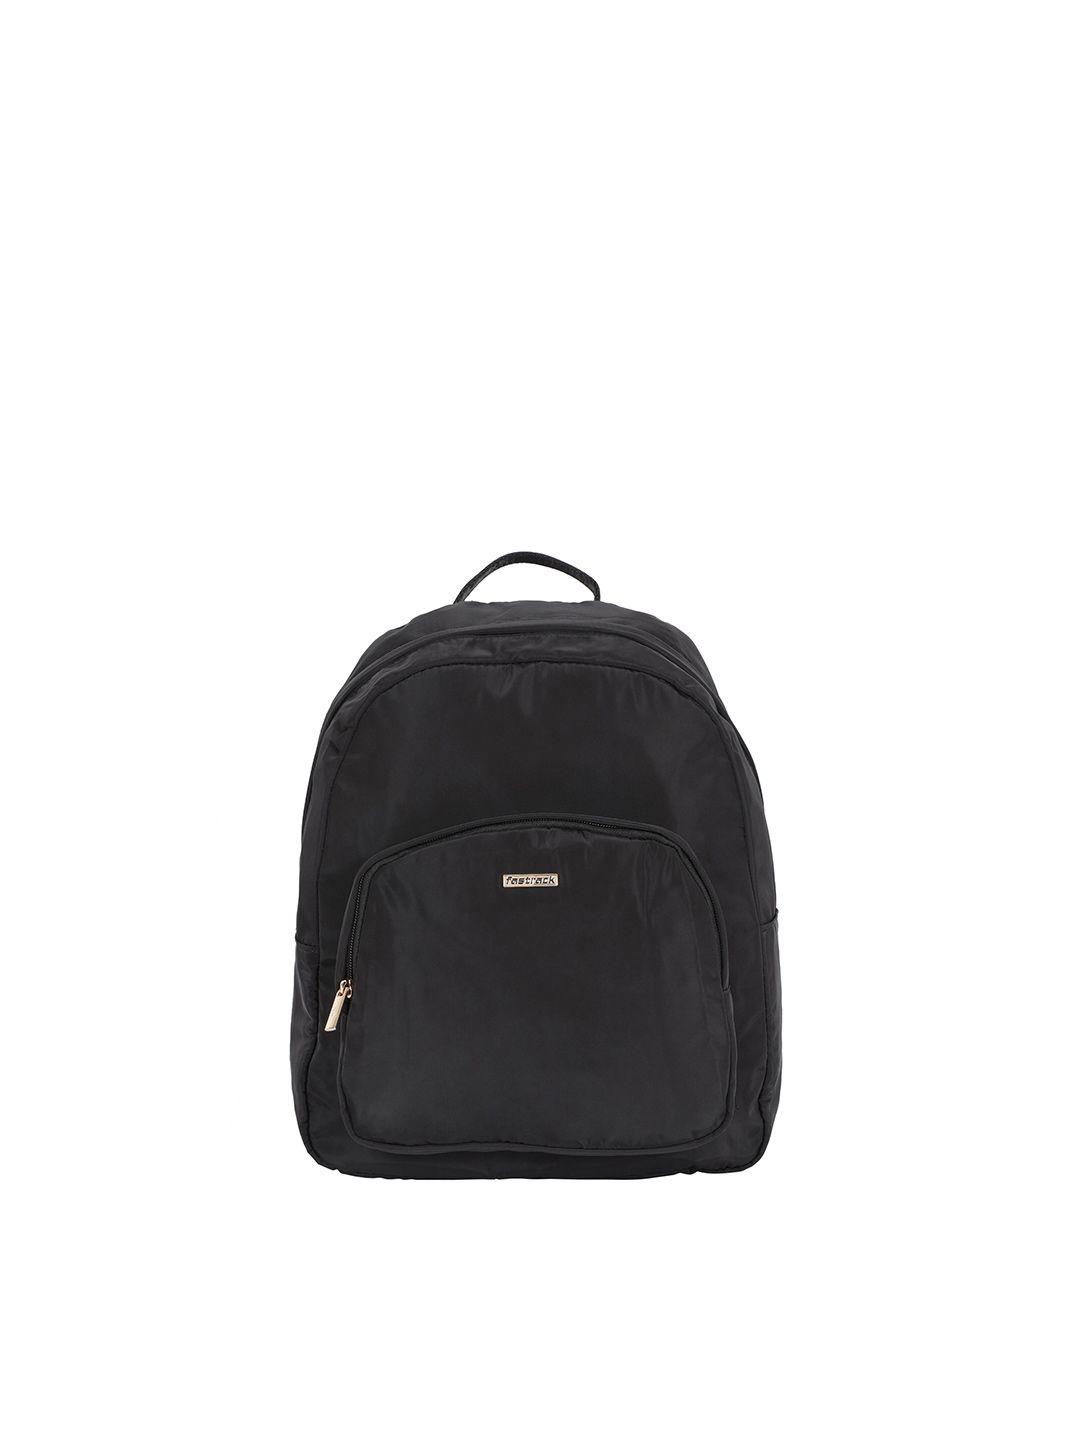 fastrack women black solid backpack